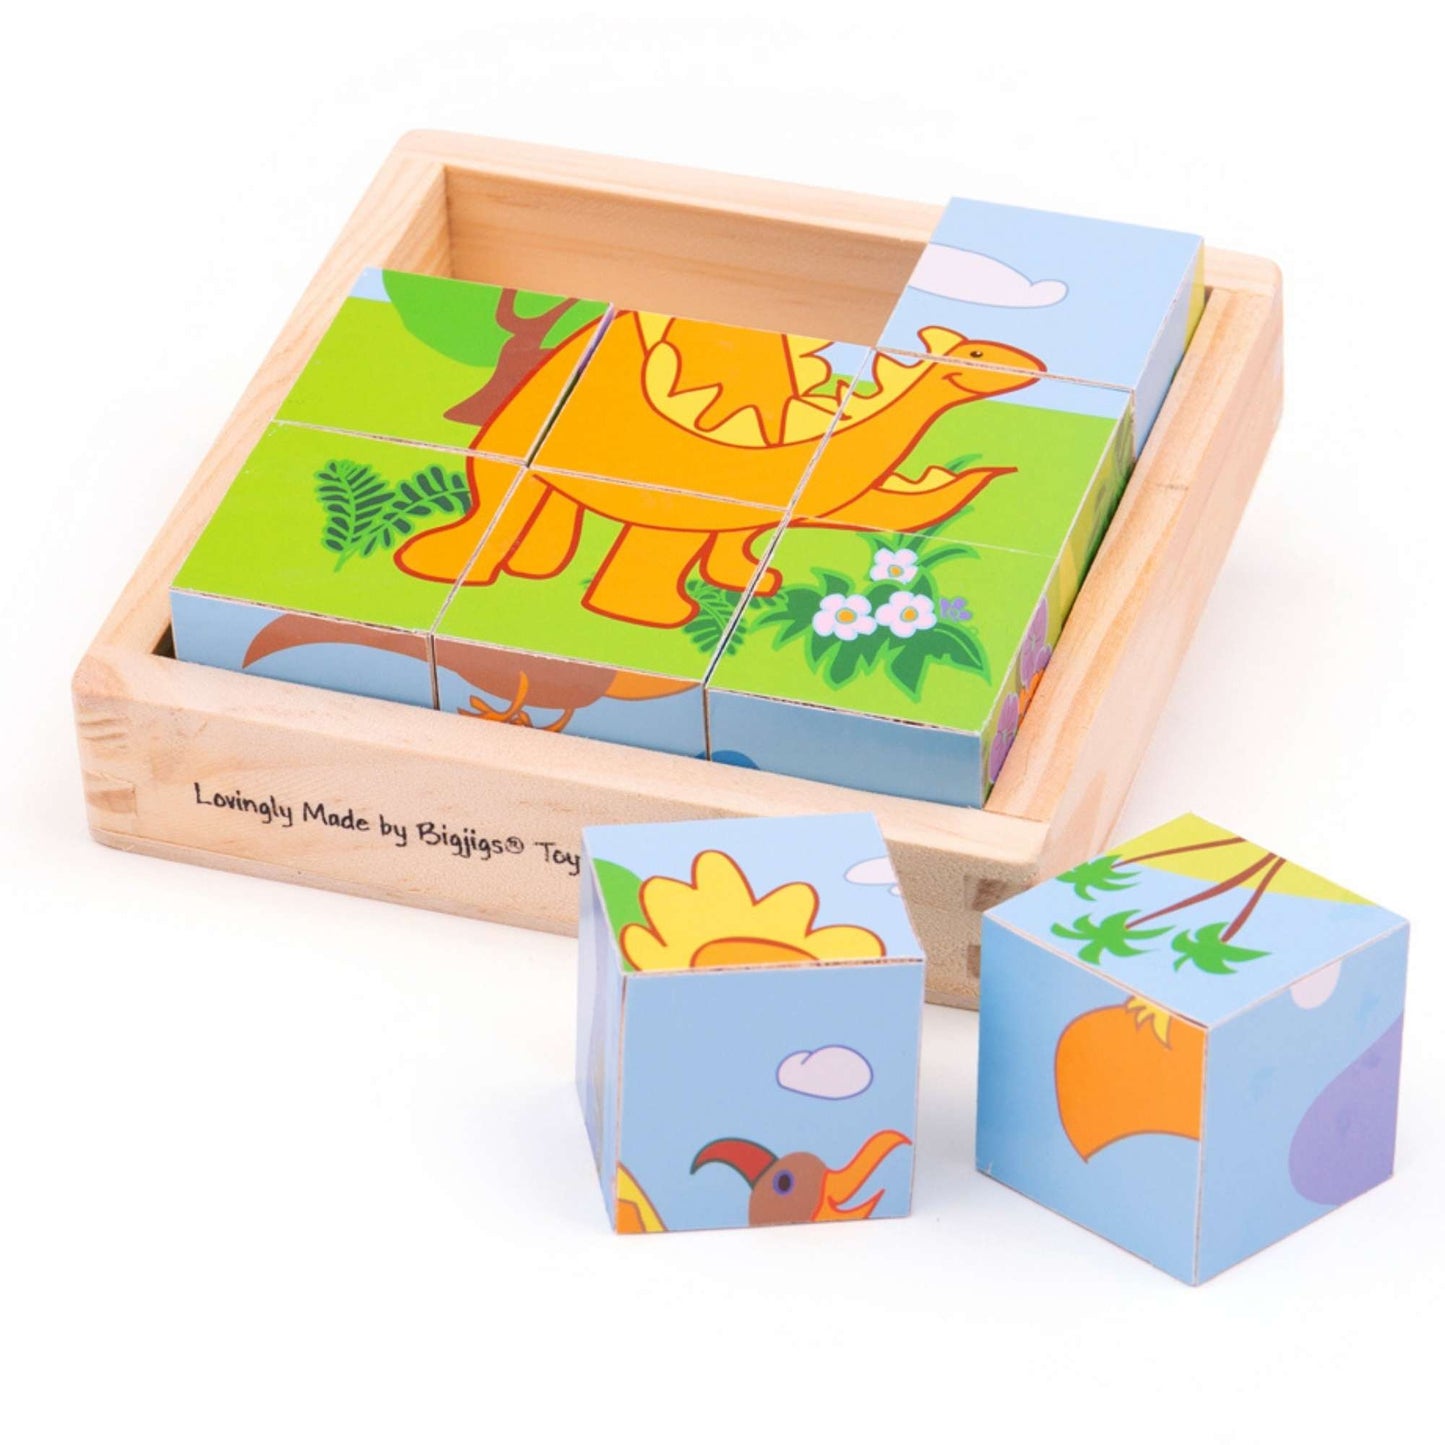 Dinosaur Theme Sensory Surprise Box - Suitable For Ages 1 year+